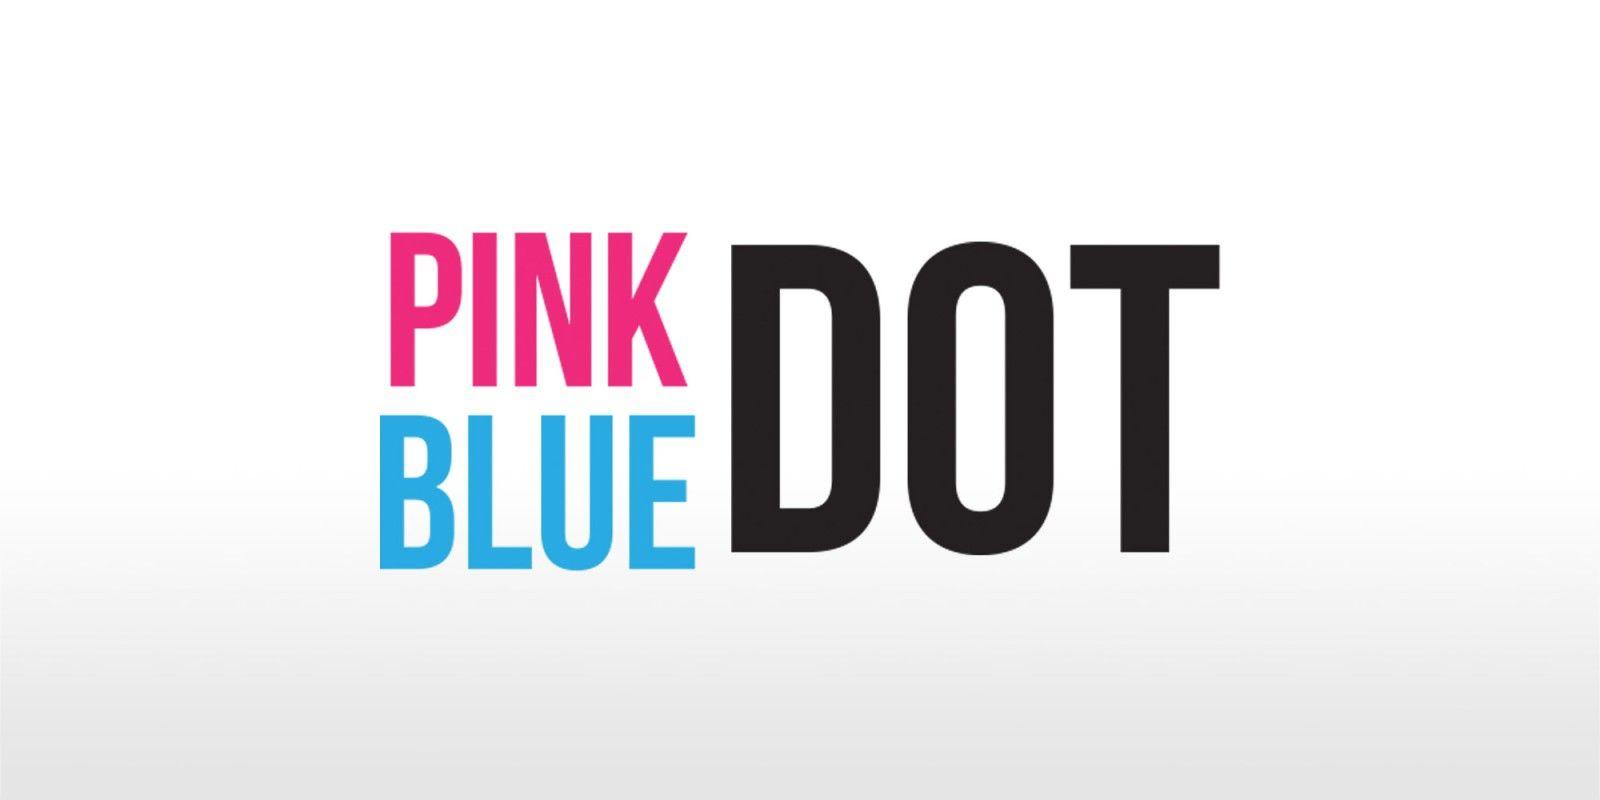 Blue and Pink Dot Logo - PINK DOT BLUE DOT | New Nintendo 3DS Download Software | Games ...